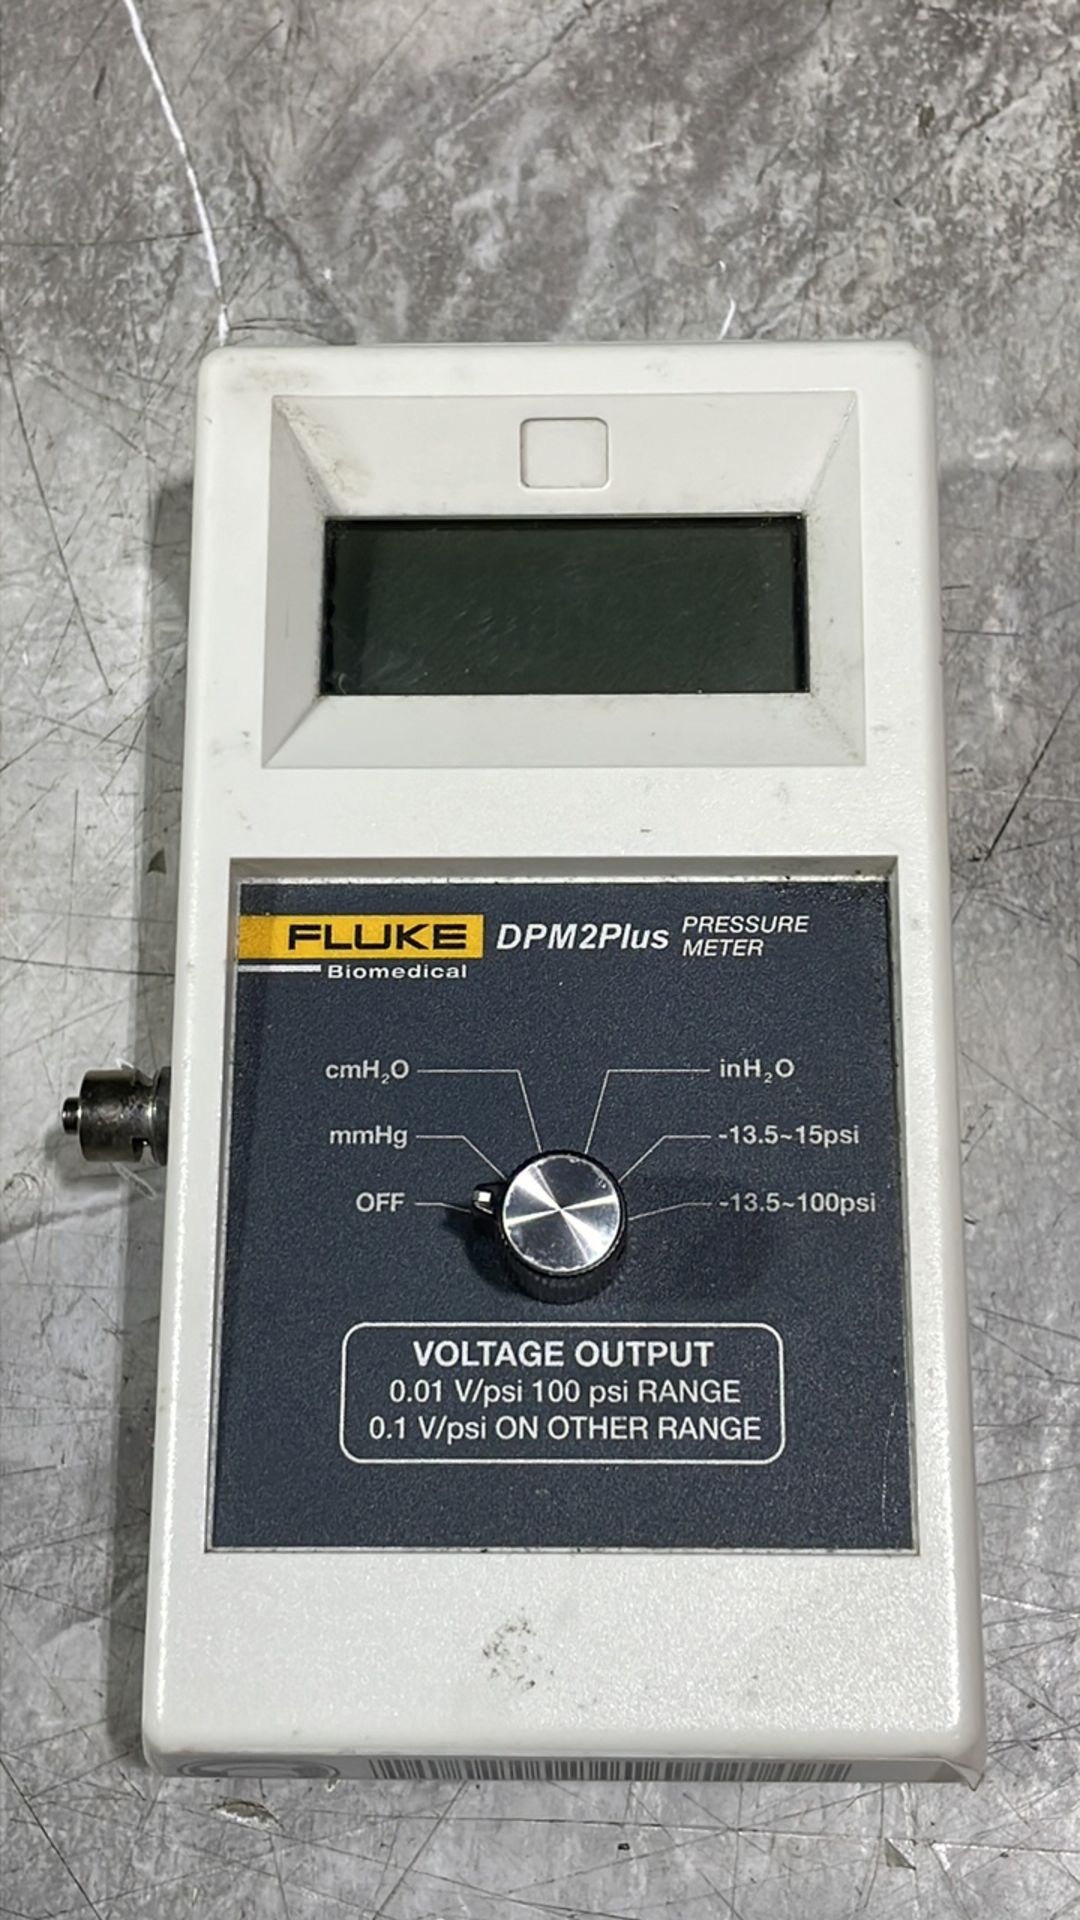 FLUKE DPM2 PLUS PRESSURE METER SN 3061018